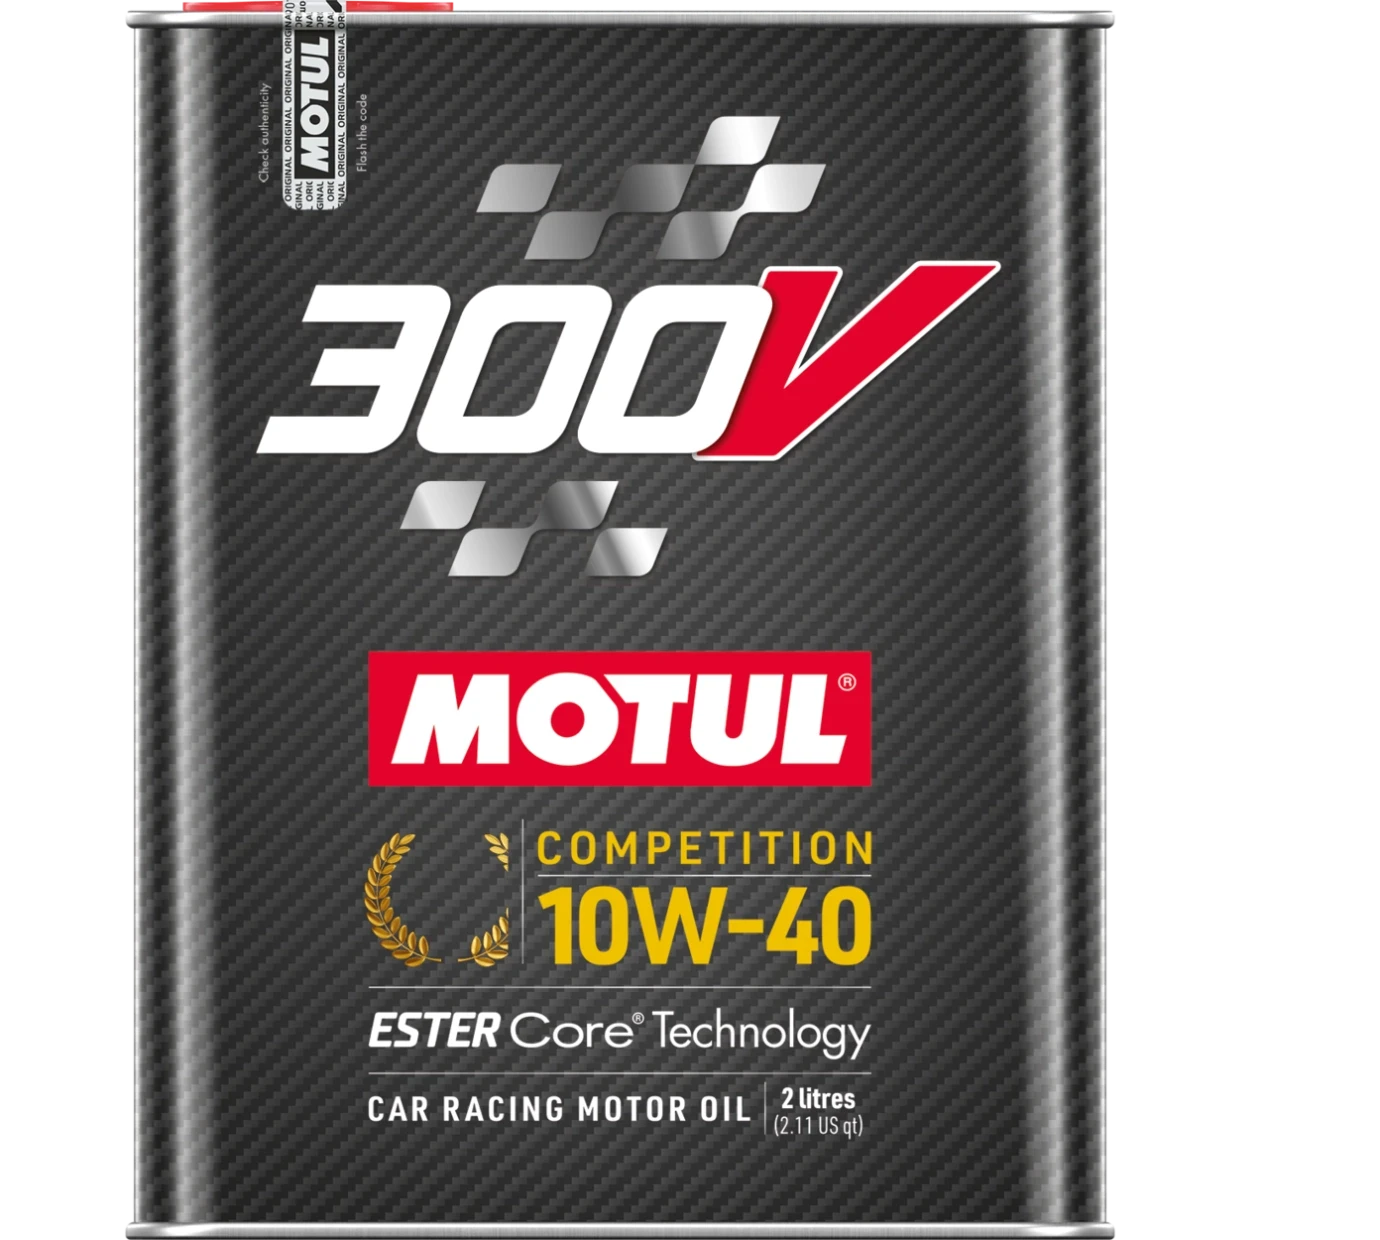 MOTUL 300V COMPETITION 10W-40